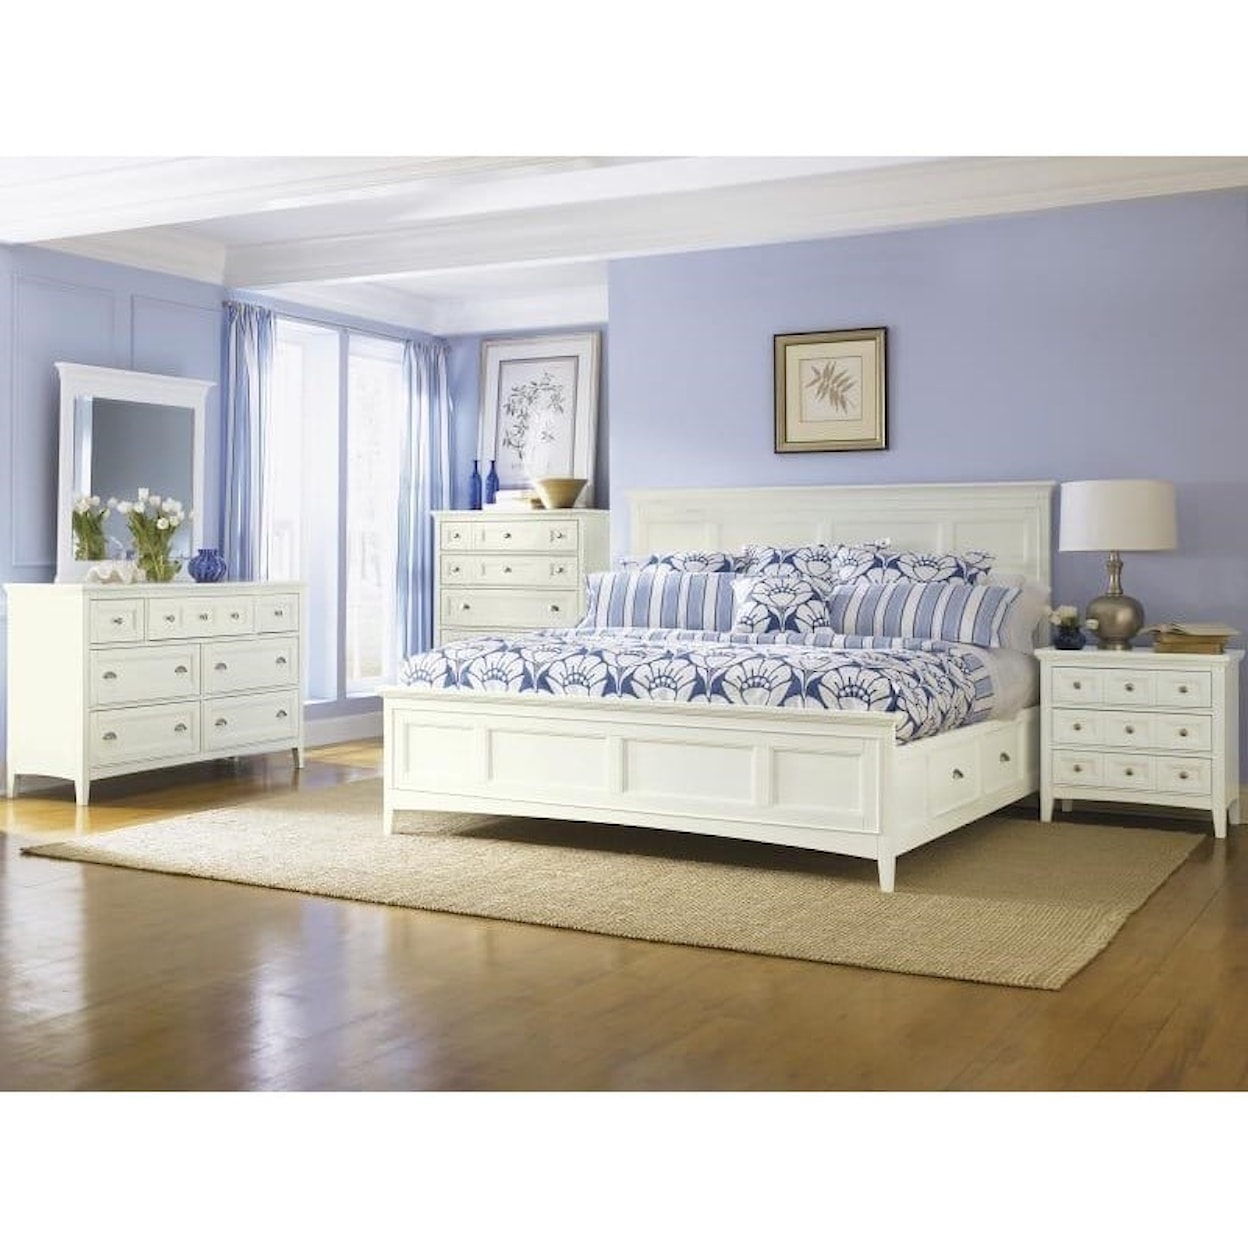 Magnussen Home Kentwood Bedroom King Panel Bed with Storage Rails